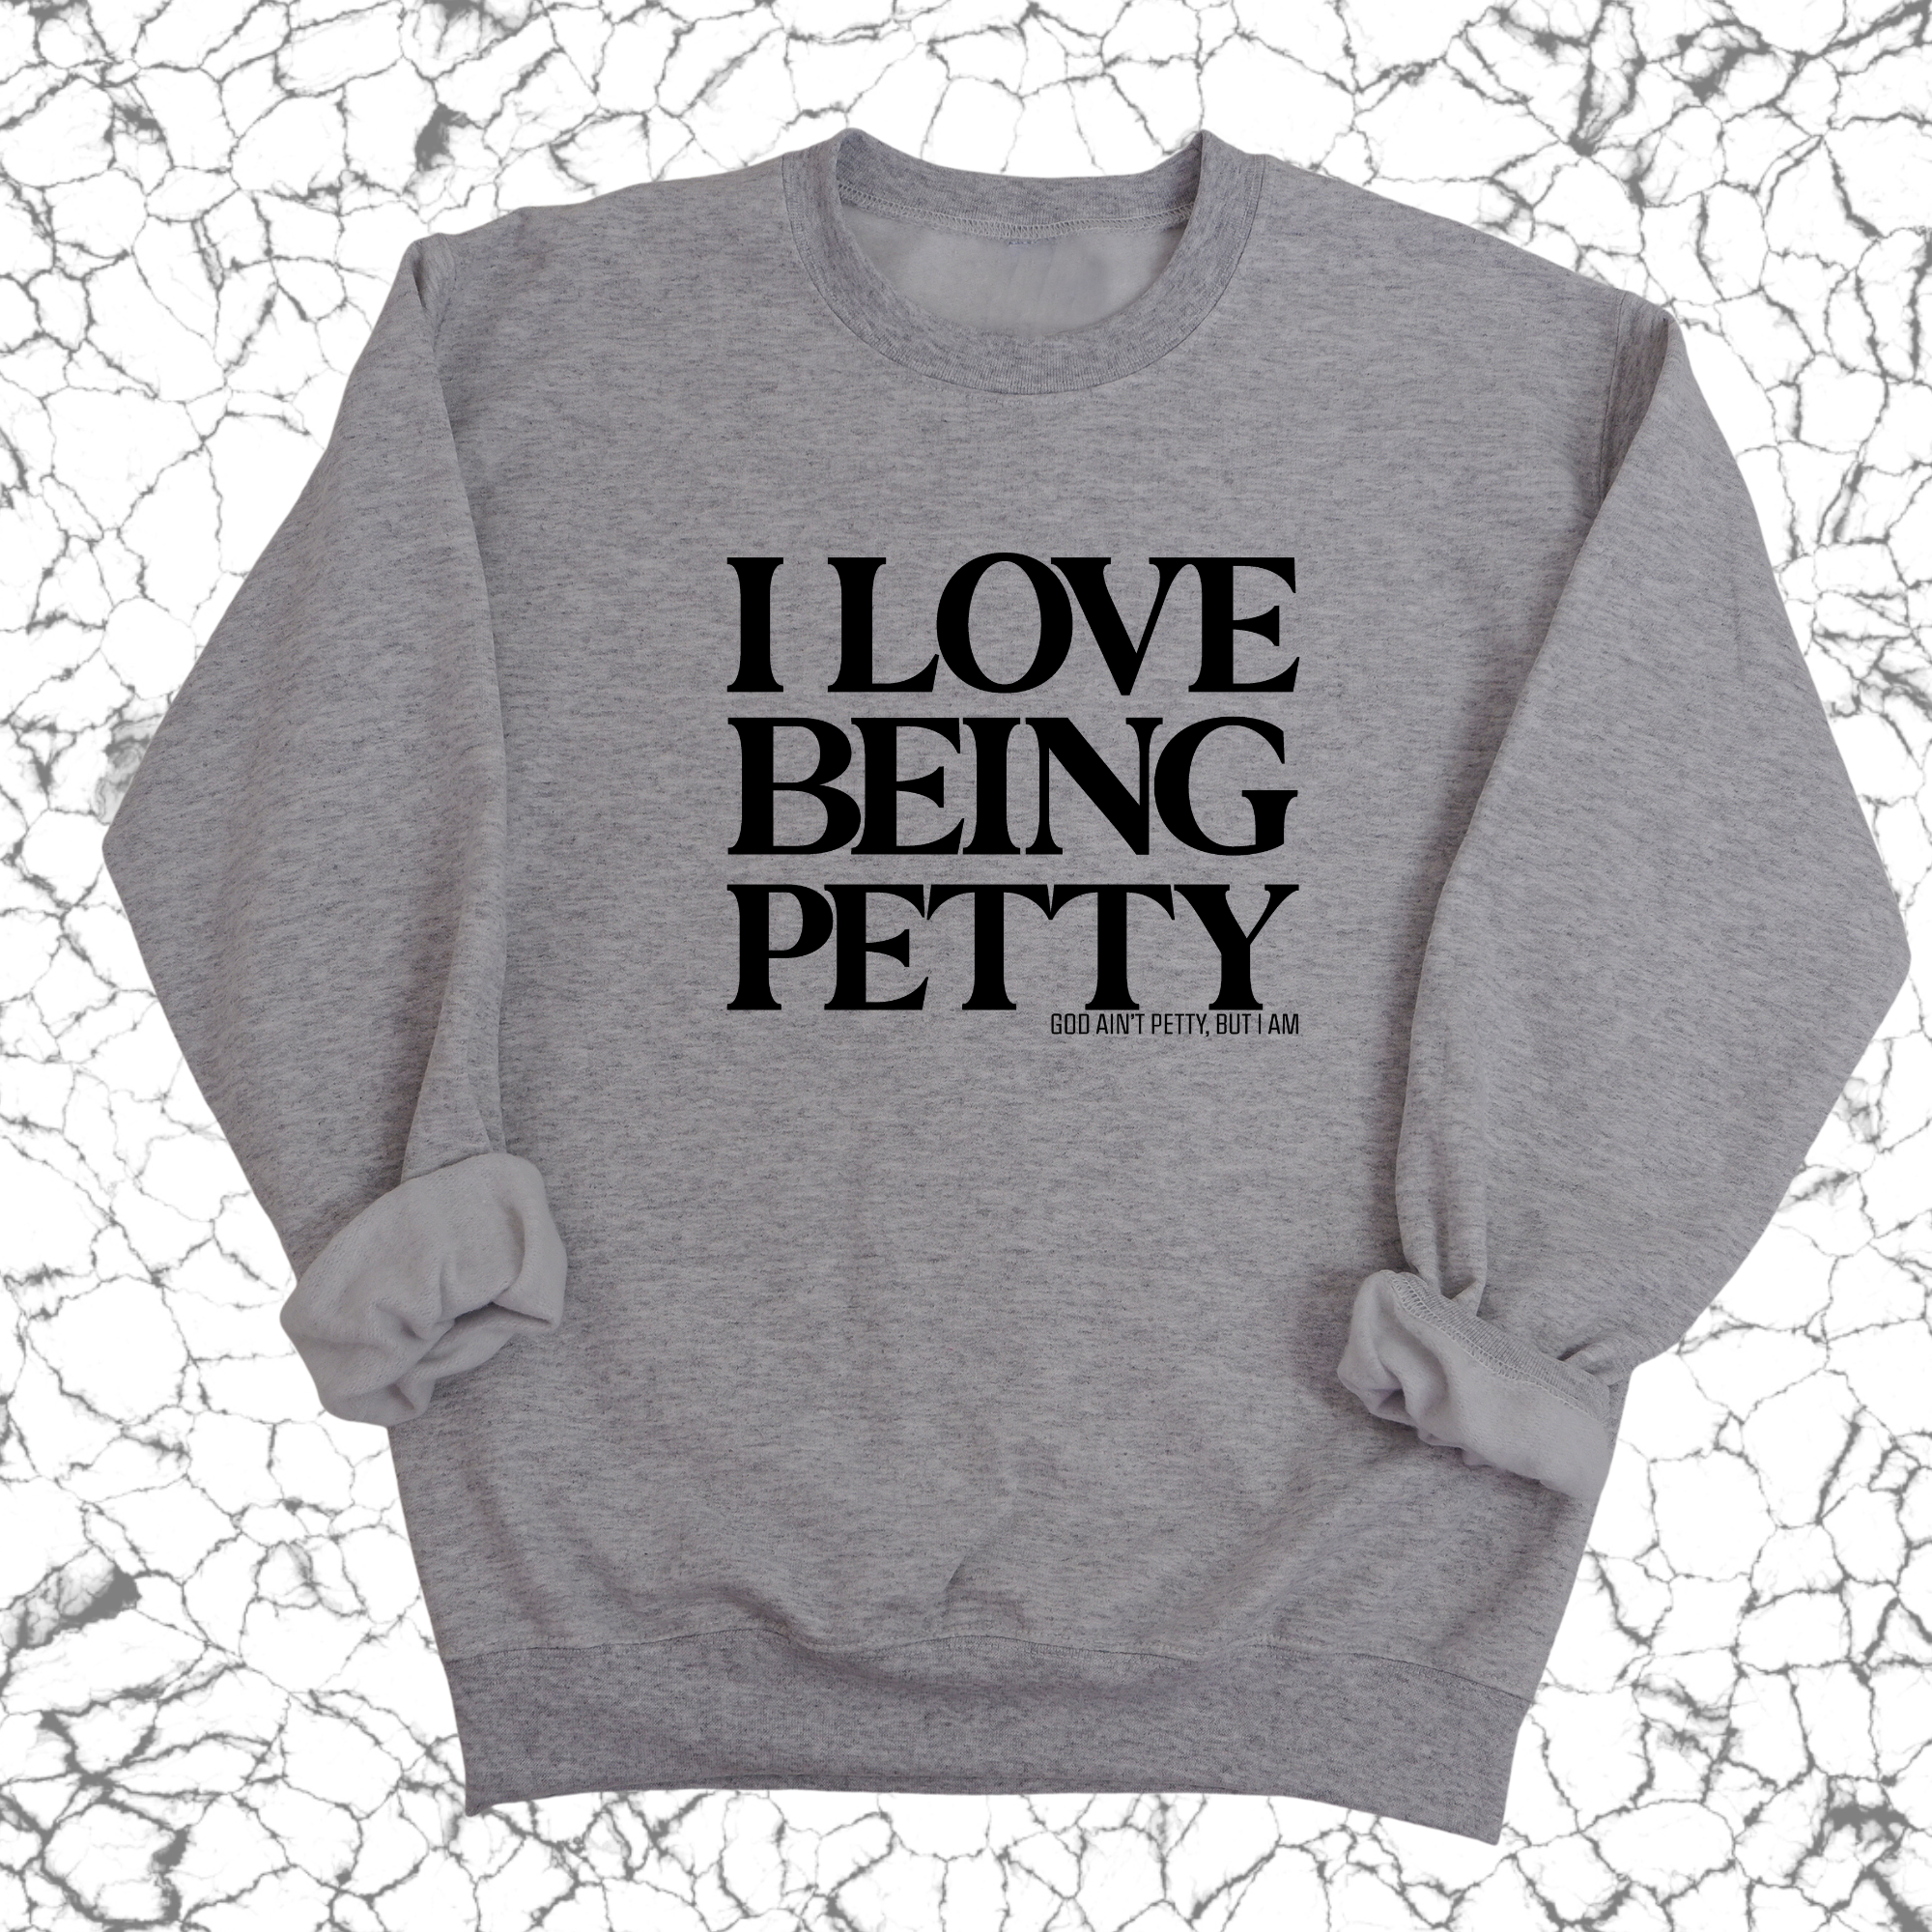 I Love Being Petty Unisex Sweatshirt-Sweatshirt-The Original God Ain't Petty But I Am